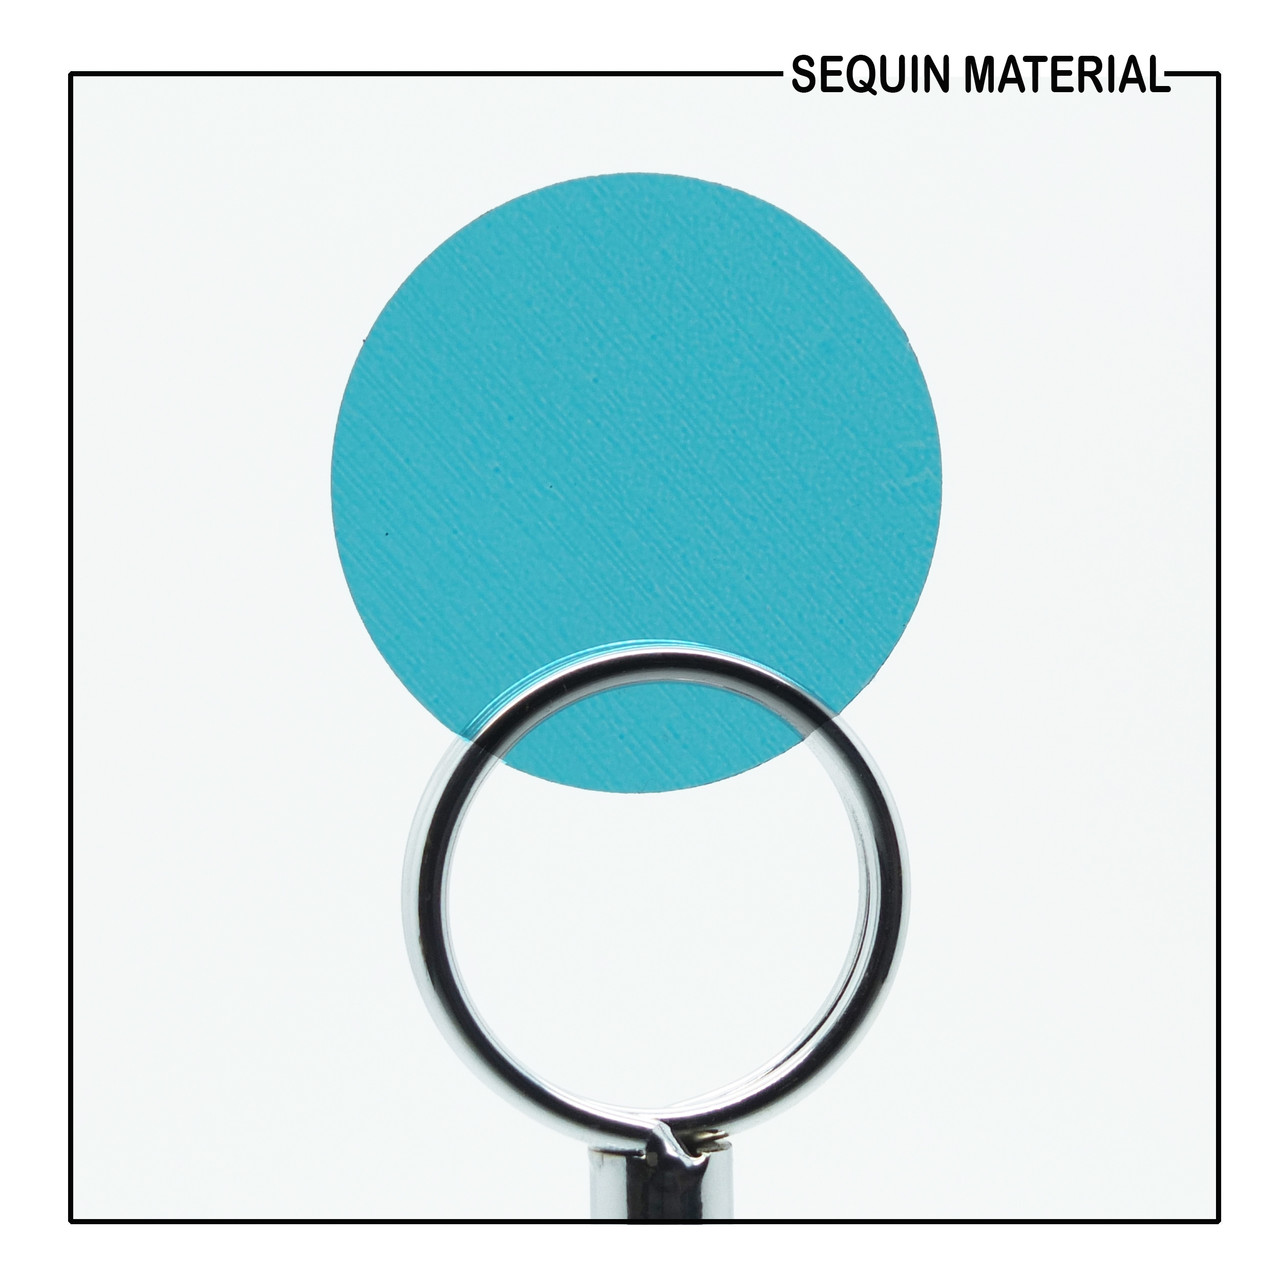 SequinsUSA Aqua Blue Transparent Glossy See-Thru Sequin Material Film RL504